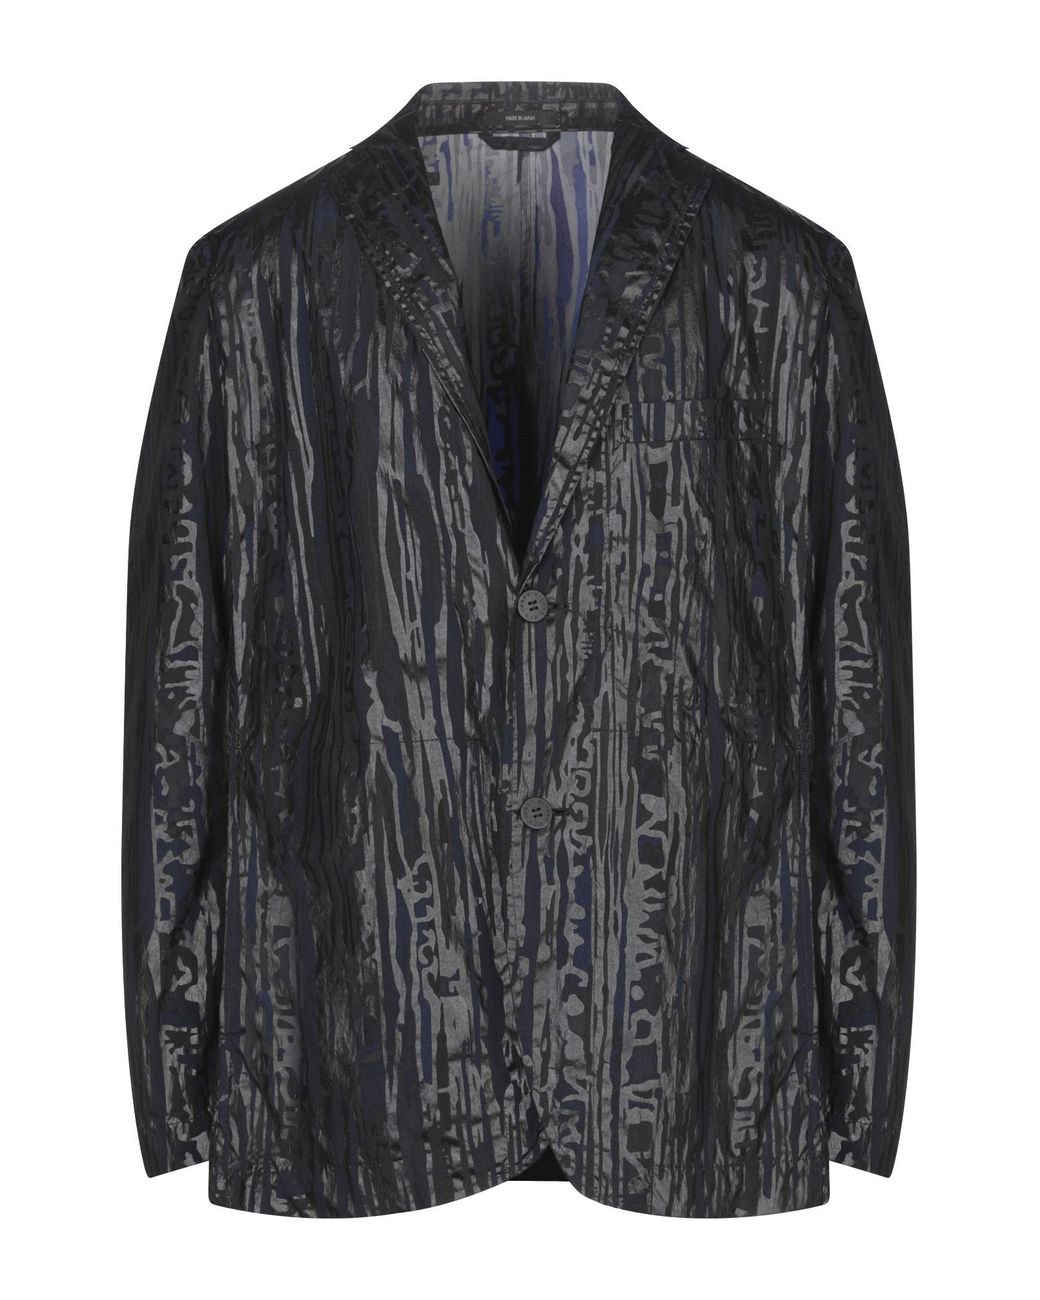 Issey Miyake Suit Jacket in Black for Men - Lyst